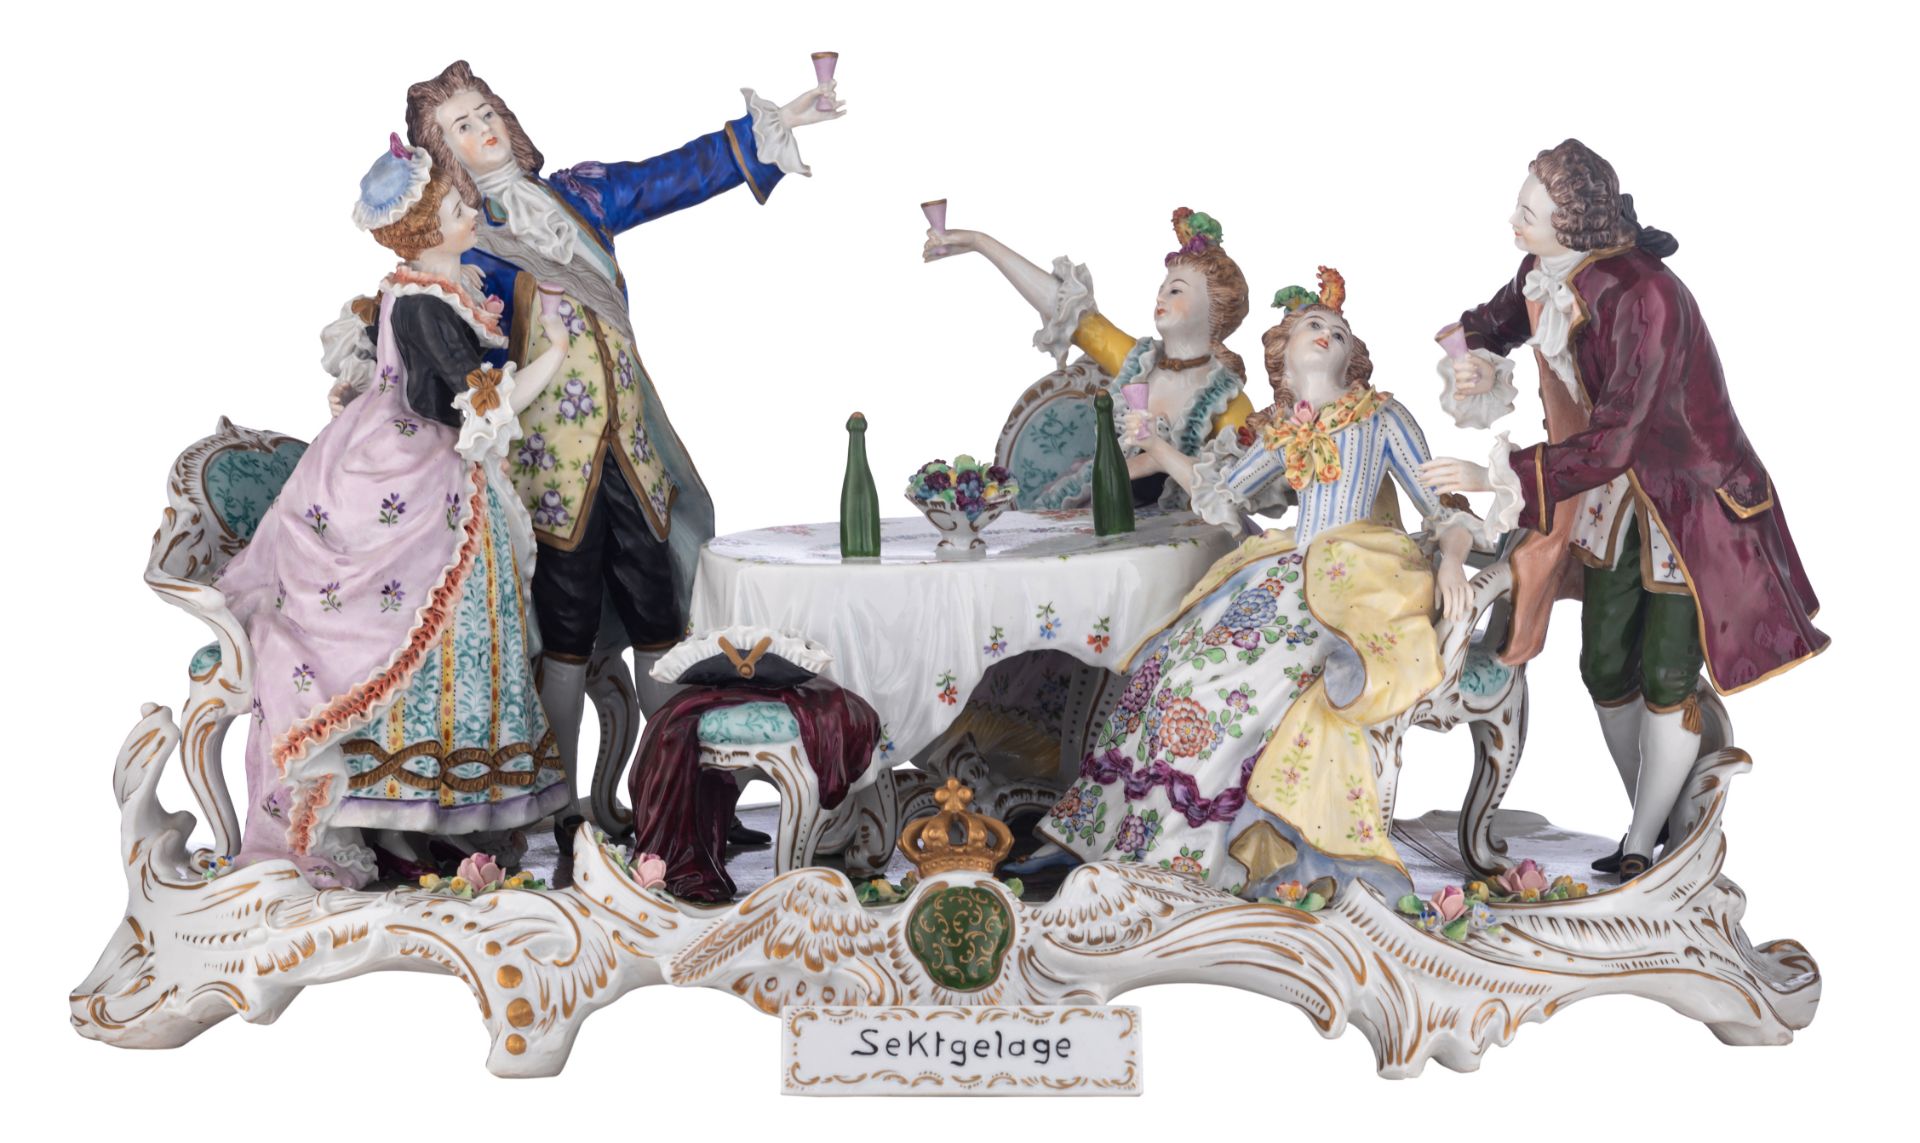 A large polychrome and gilt decorated Saxony porcelain group, titled 'Sektgelage', depicting the hig